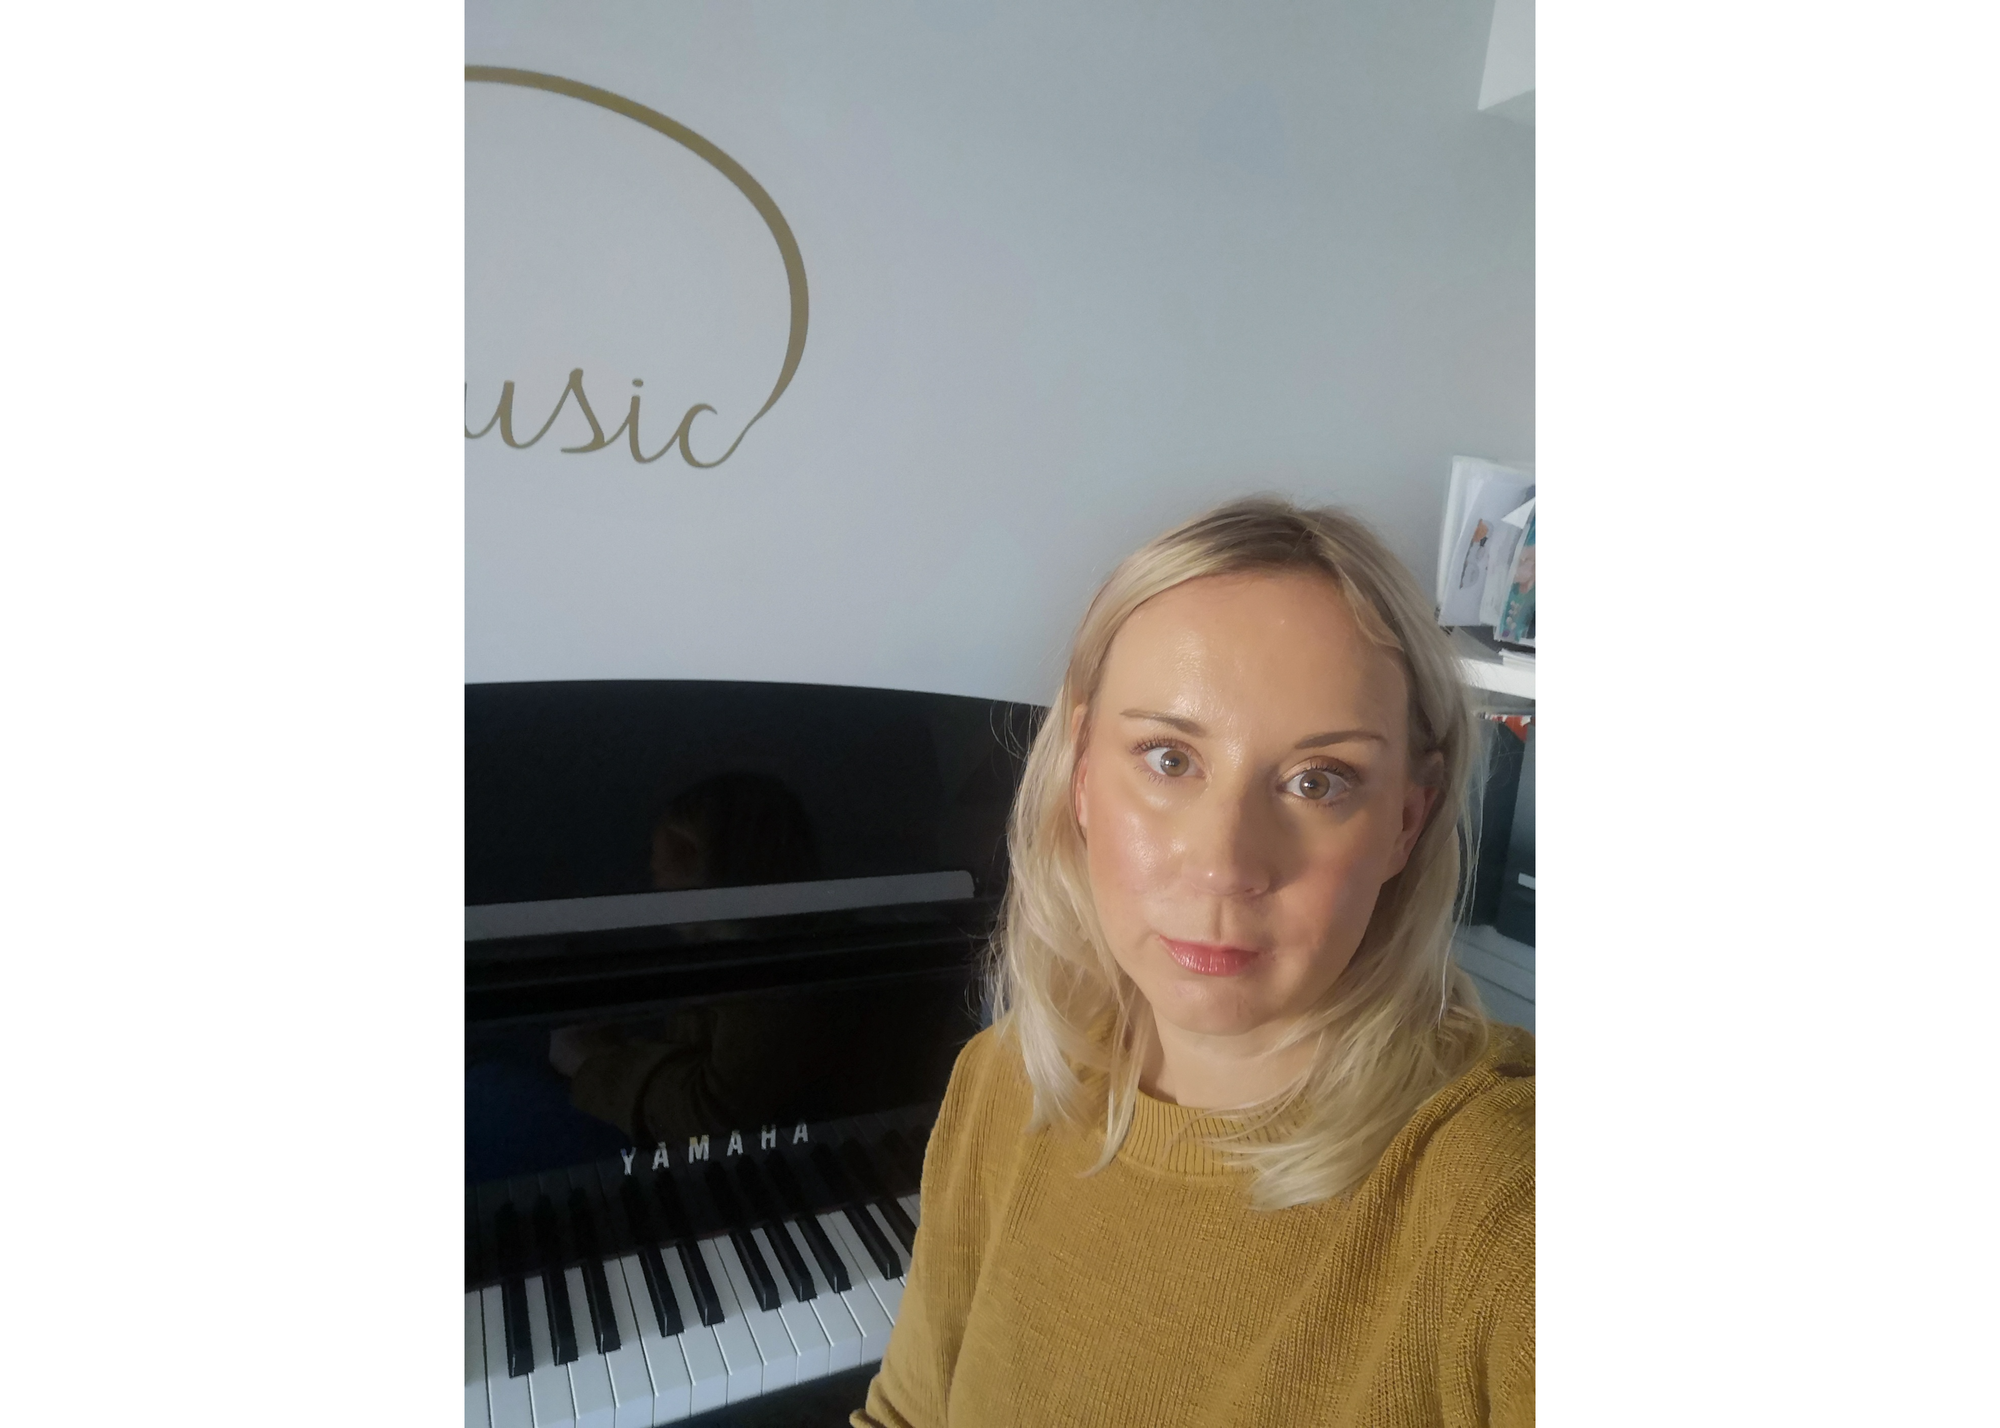 Noted Music Studio - Laura Styler